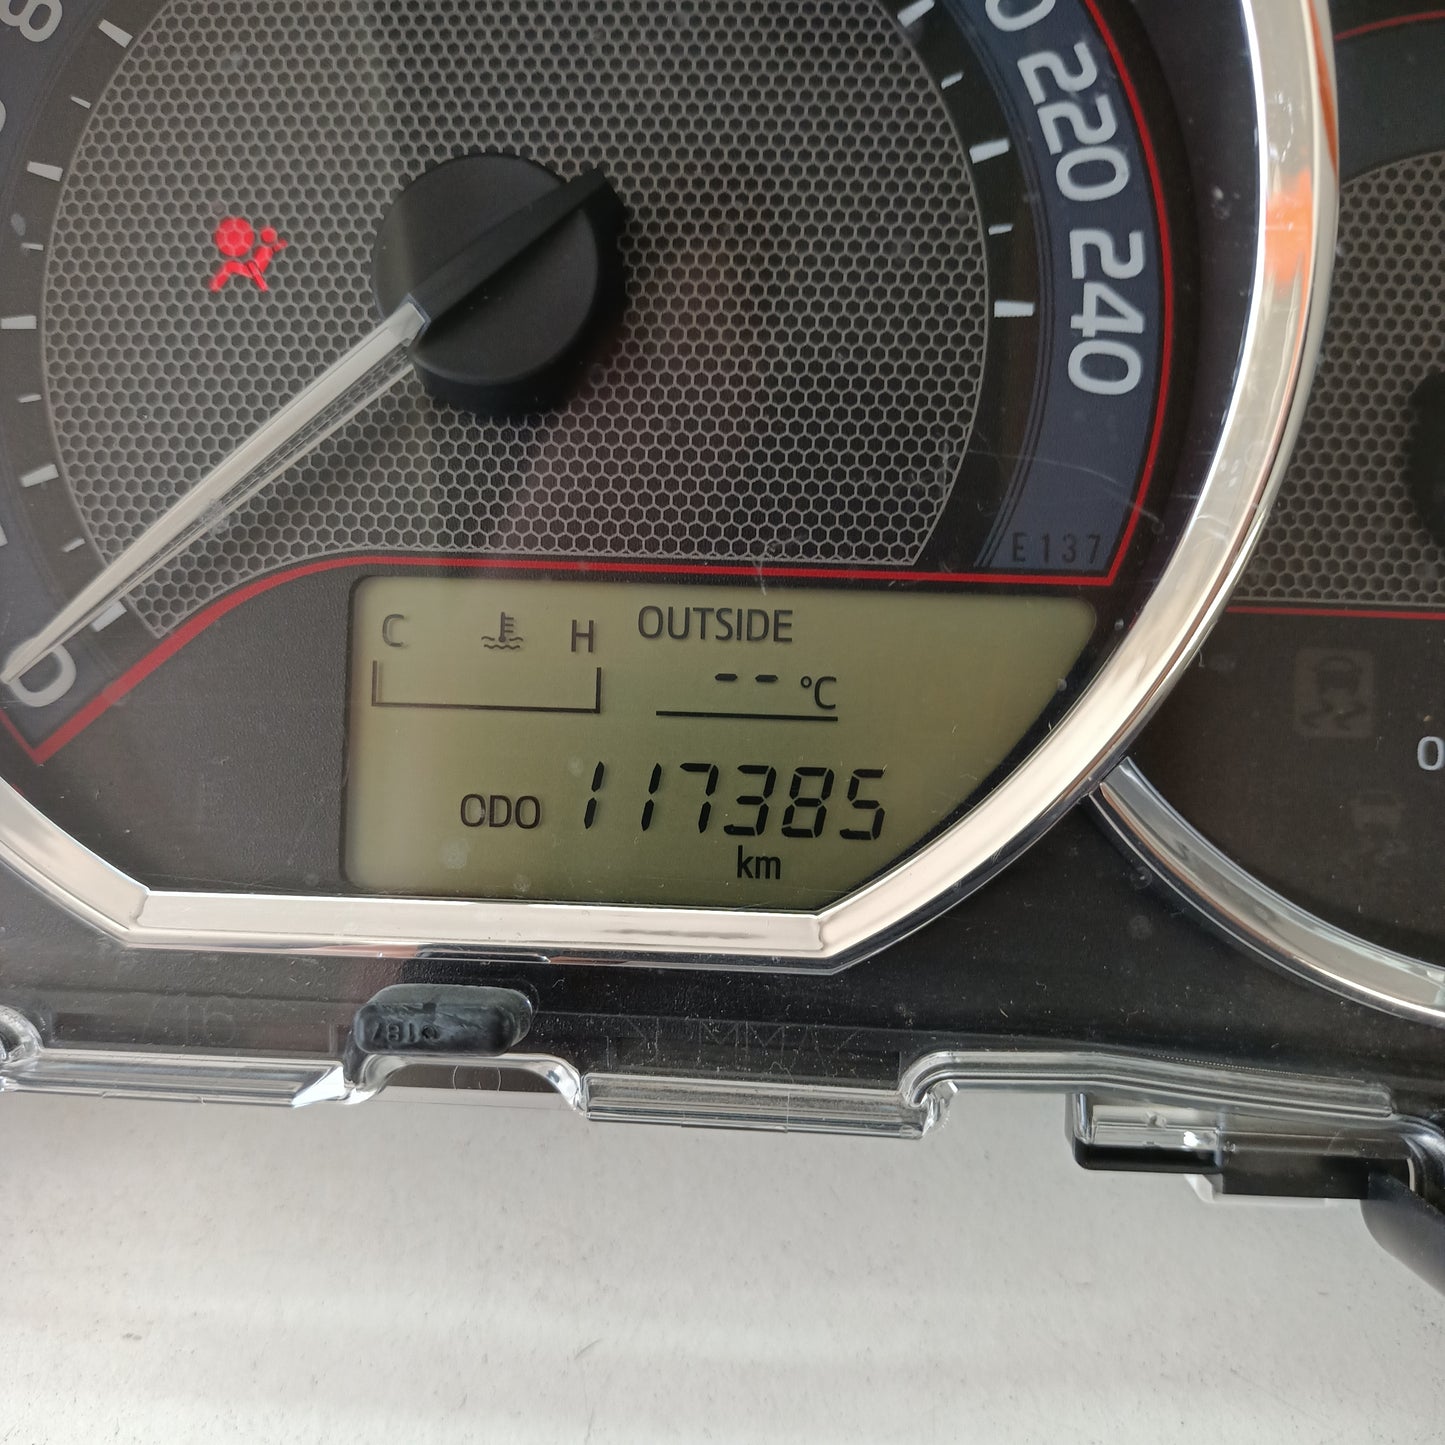 Toyota Corolla Hatchback Instrument Cluster ZRE182R 2012 2013 2014 2015 117385km